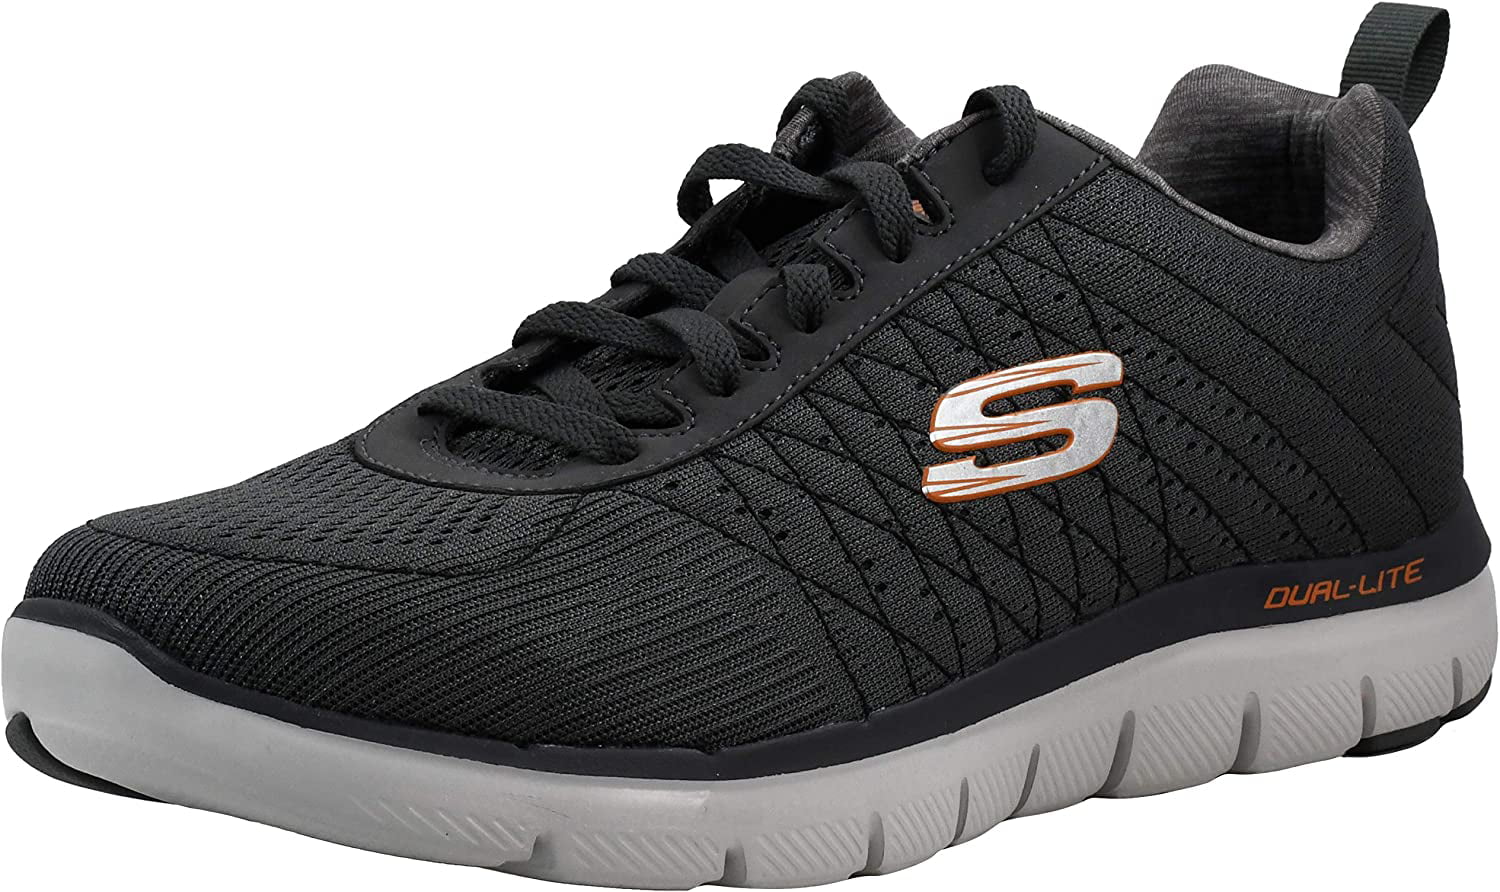 Obstinado Muscular Incorporar 52185 Black Skechers Shoes Men Memory Foam Comfort Sport Run Train Mesh  Athletic - Walmart.com